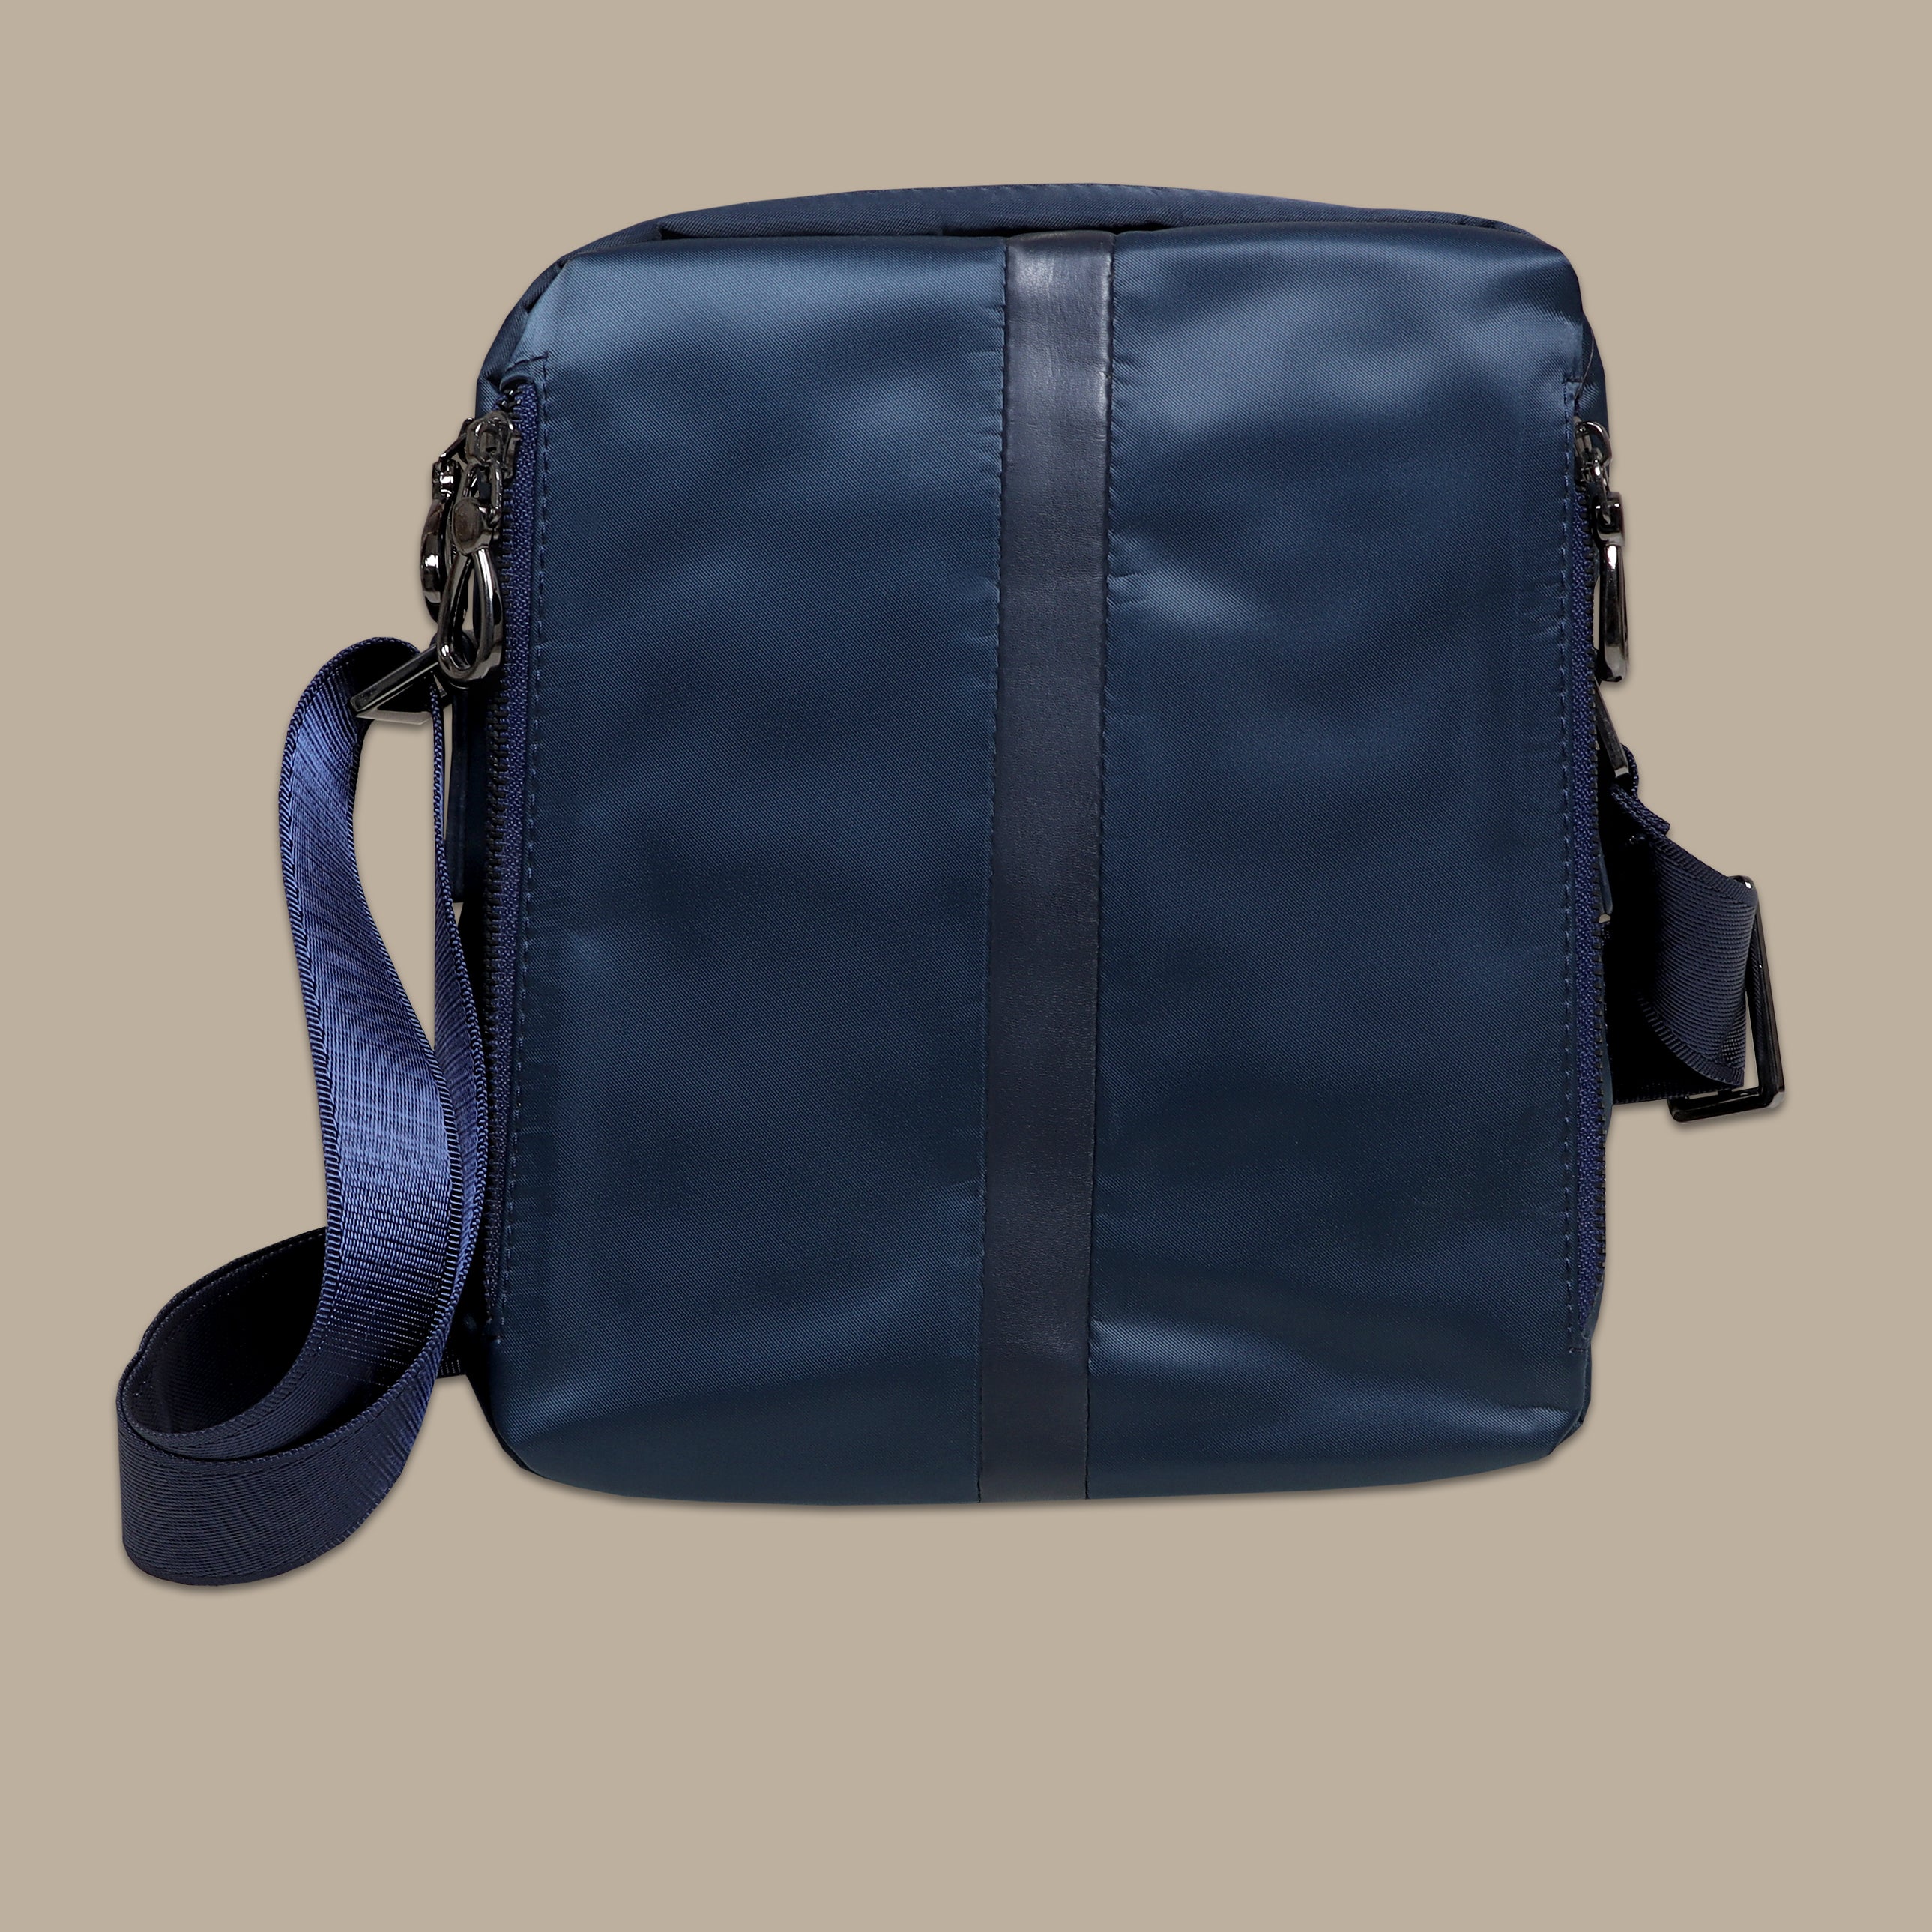 Blue Horizon: Stylish Nylon Cross bag for Everyday Adventures